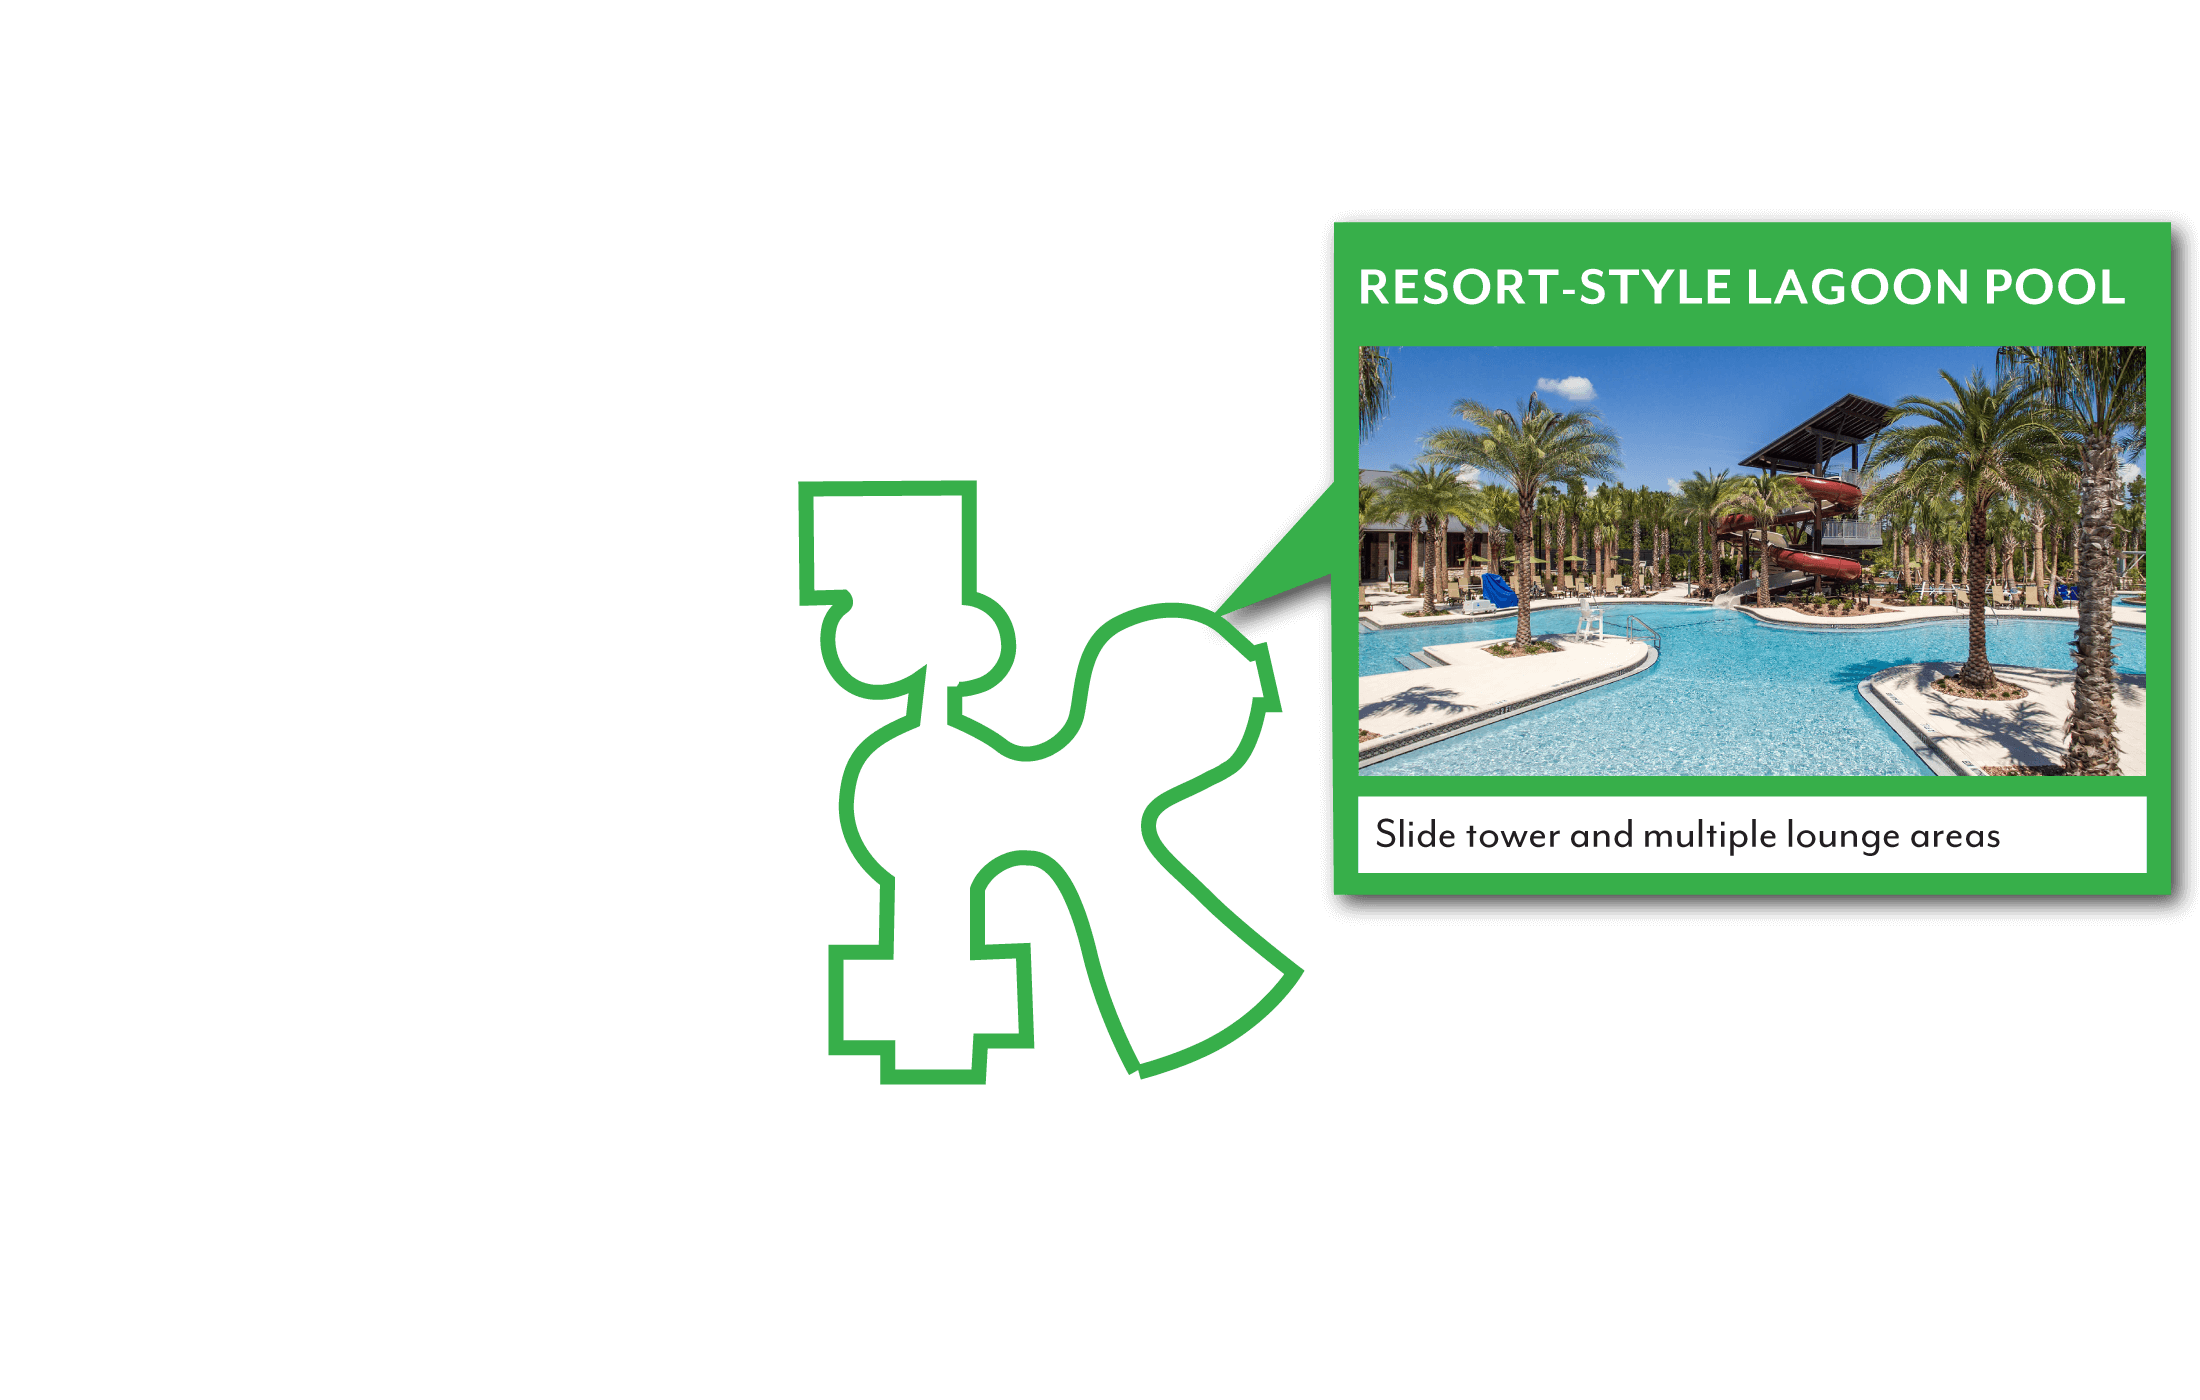 Resorty-style Lagoon Pool